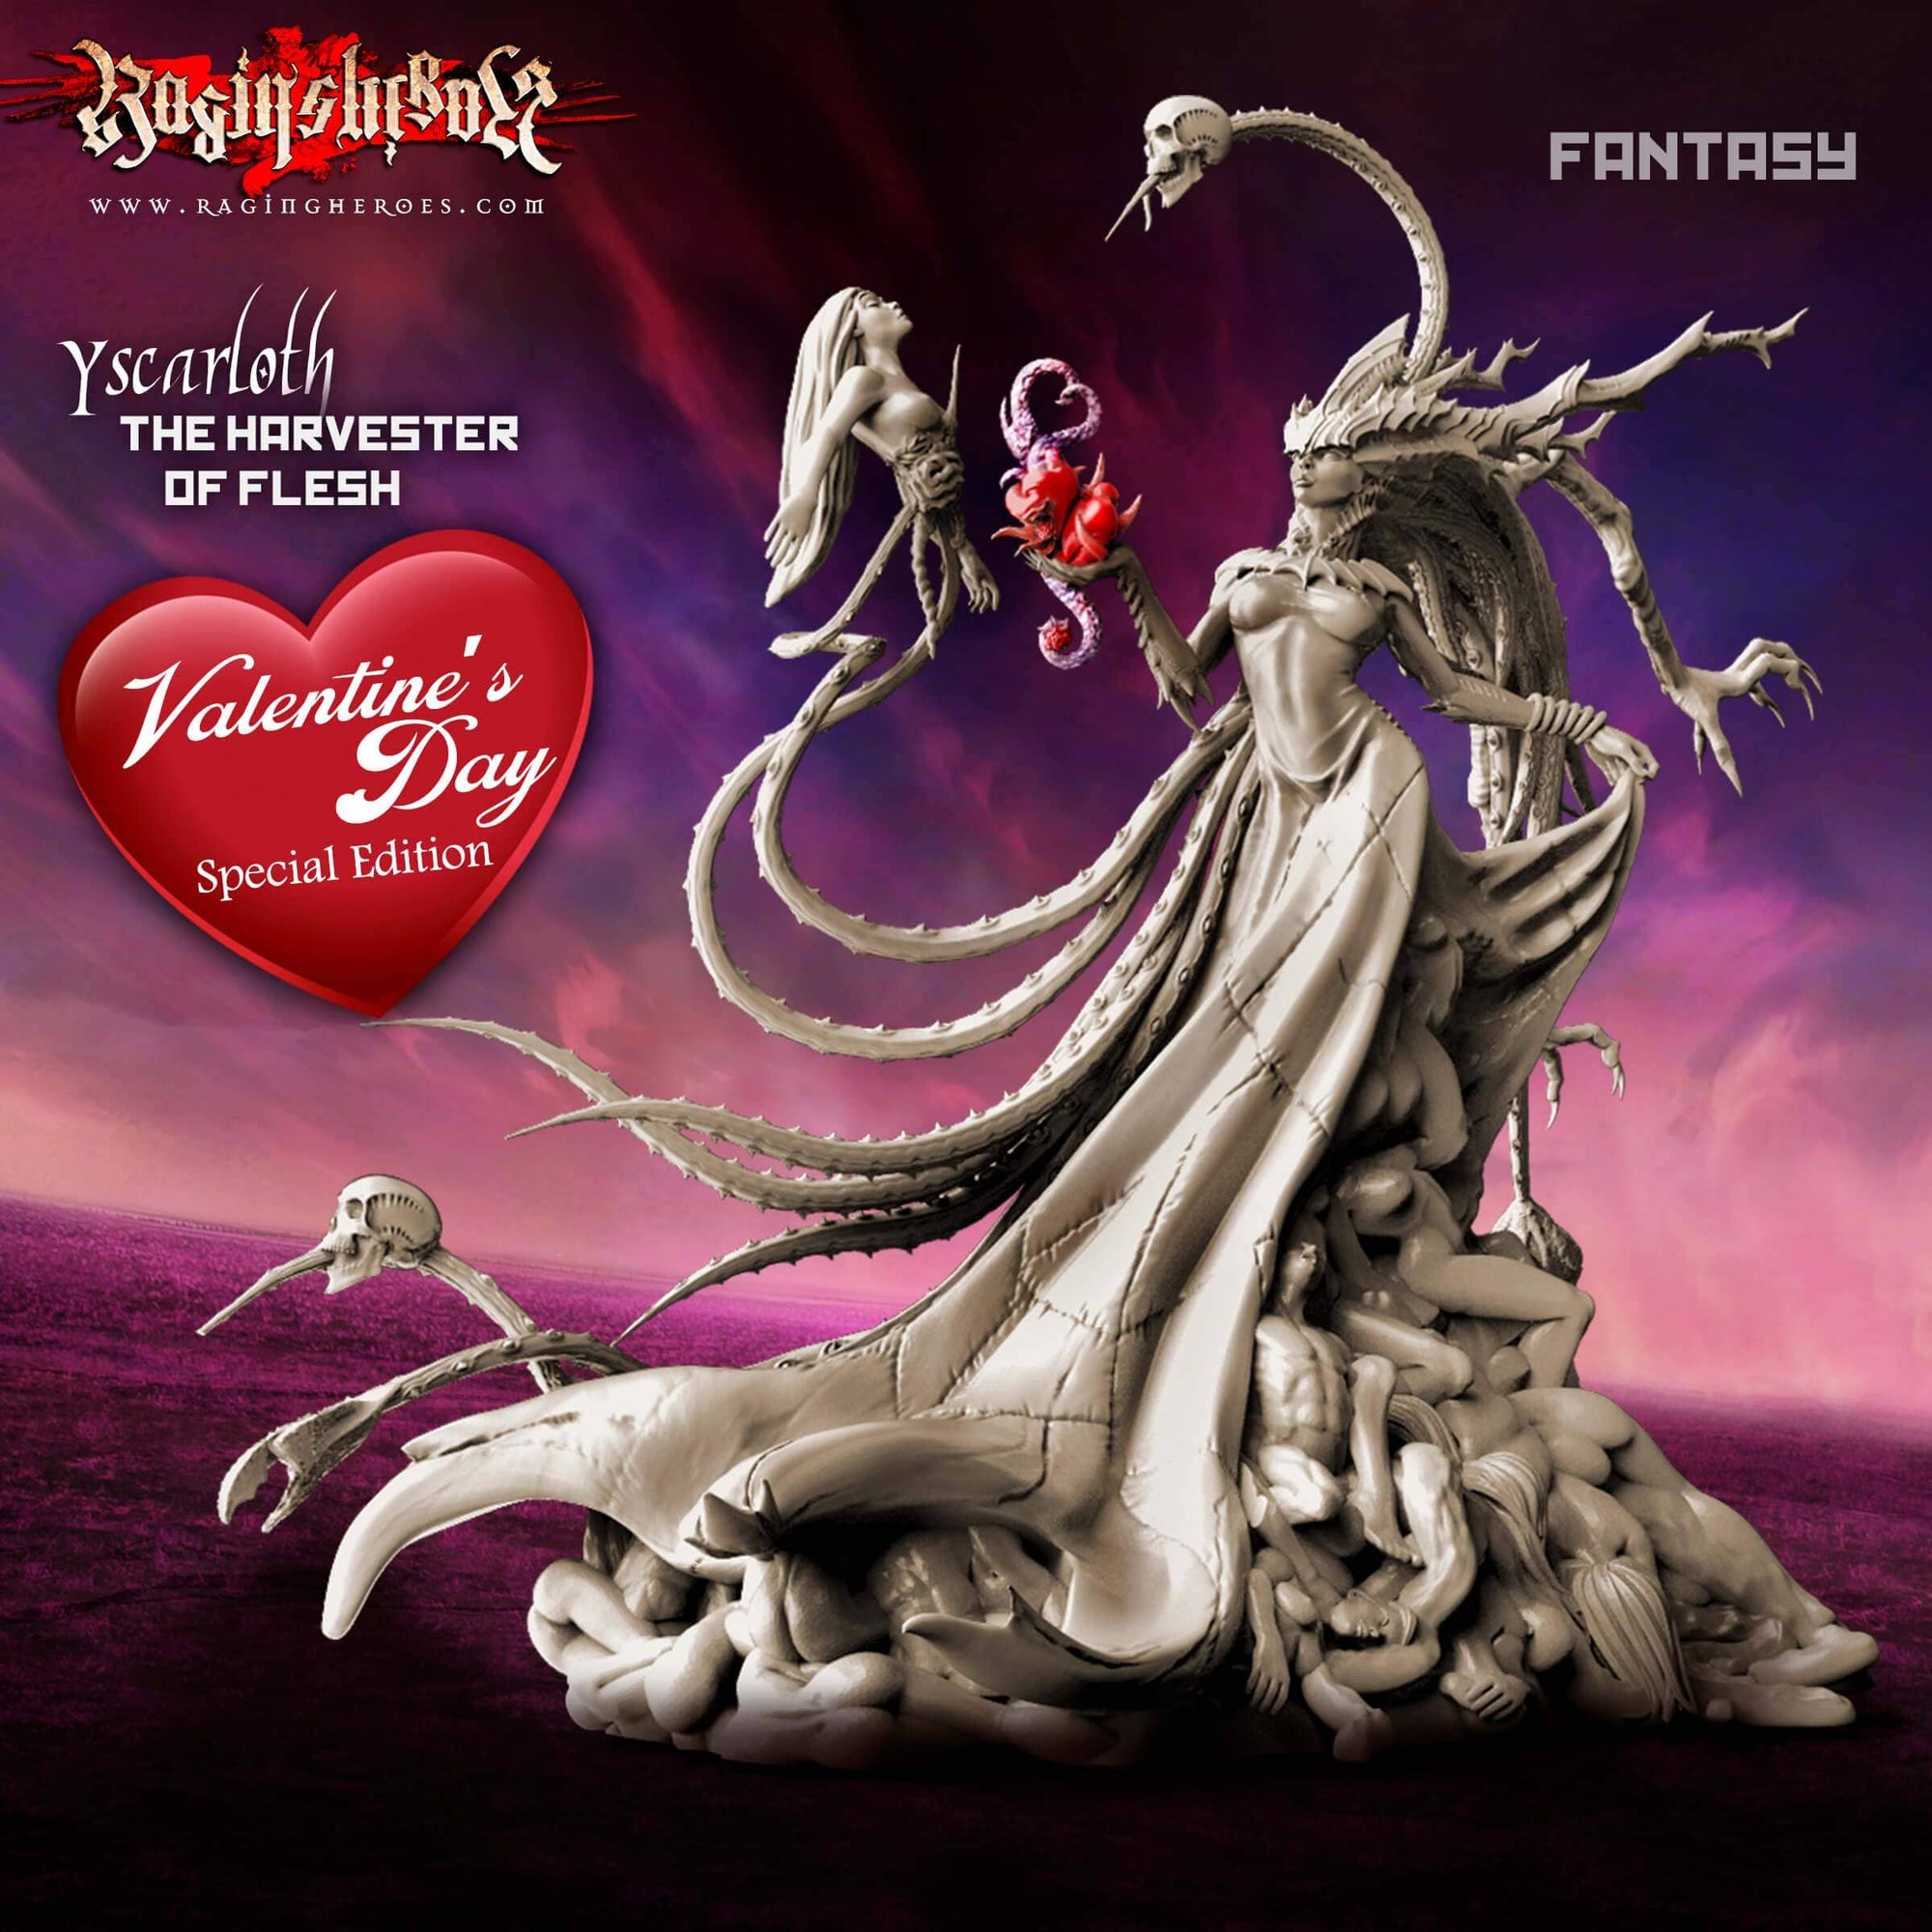 Yscarloth, Harvester of Flesh, Valentýna Special Edition Fantasy verze (LE - F)